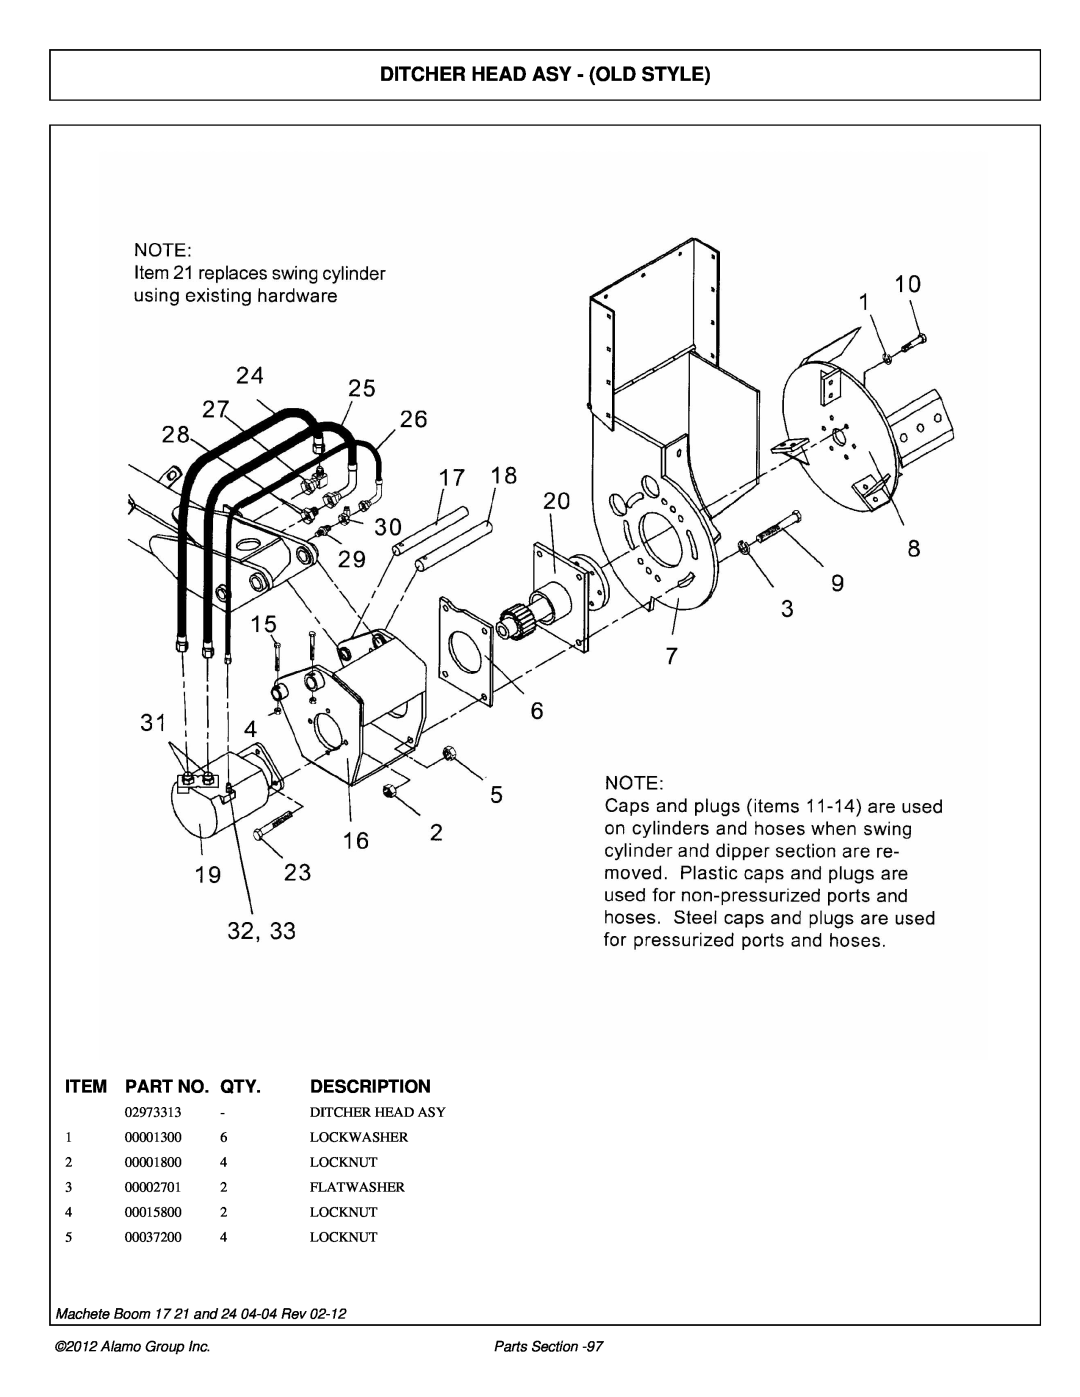 Alamo 02968915P manual Ditcher Head Asy - Old Style, Item, Part No, Description, Machete Boom 17 21 and 24 04-04Rev 